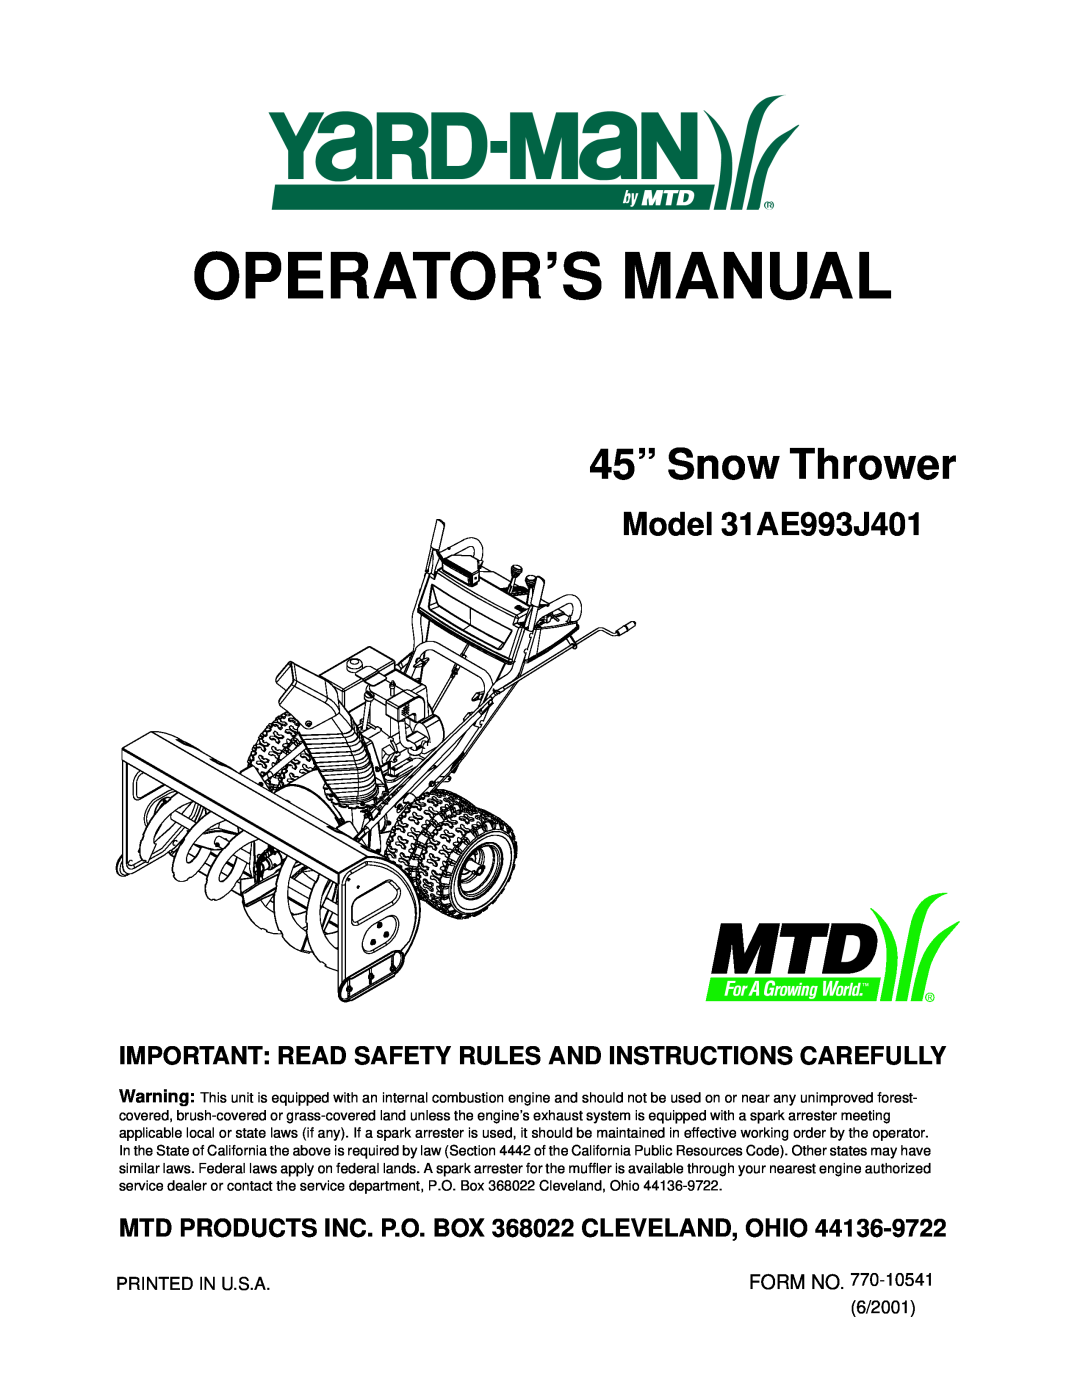 Yard-Man manual Model 31AE993J401, Operator’S Manual, 45” Snow Thrower 